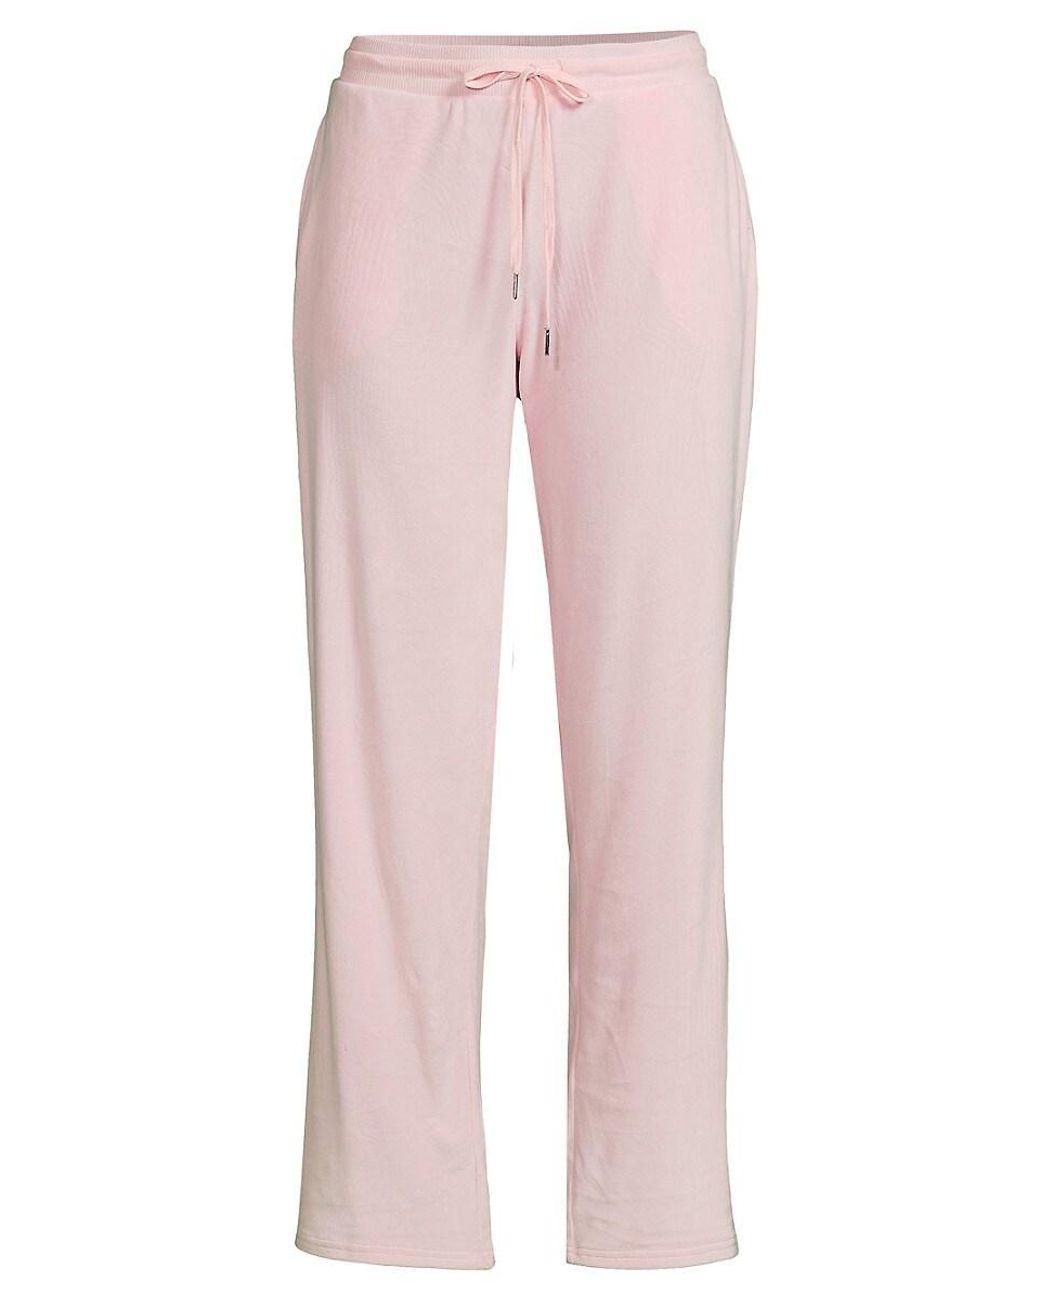 https://cdna.lystit.com/1040/1300/n/photos/saksoff5th/8702a29b/juicy-couture-Pink-Embellished-Logo-Drawstring-Lounge-Pants.jpeg